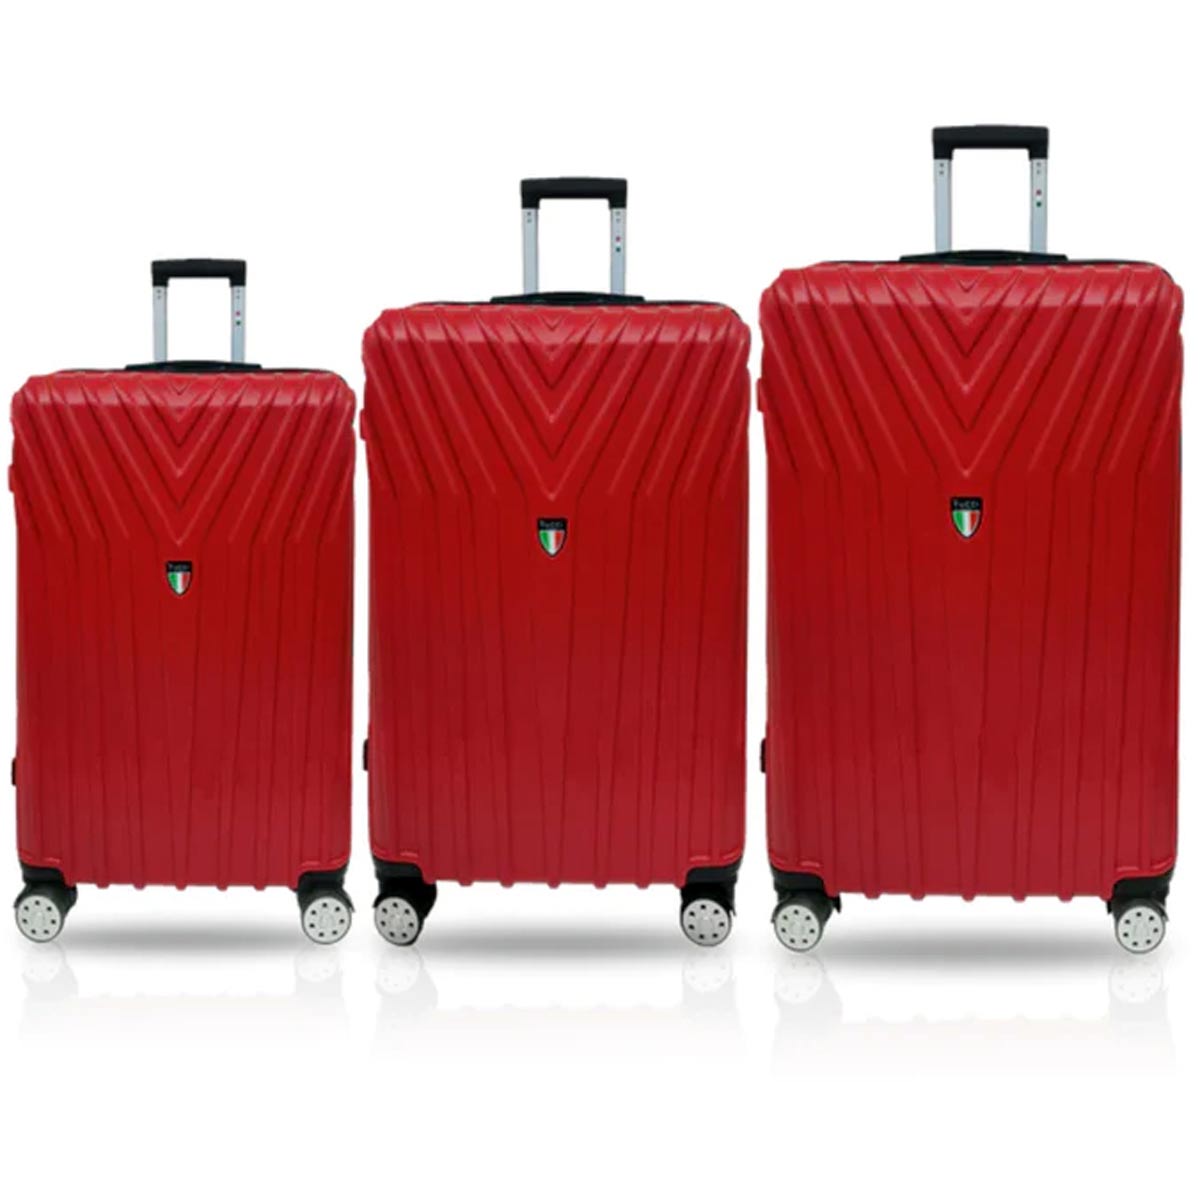 Tucci T0323-03PC-DRED Bordo T0323 ABS Luggage Set Dark Red - 3 Piece